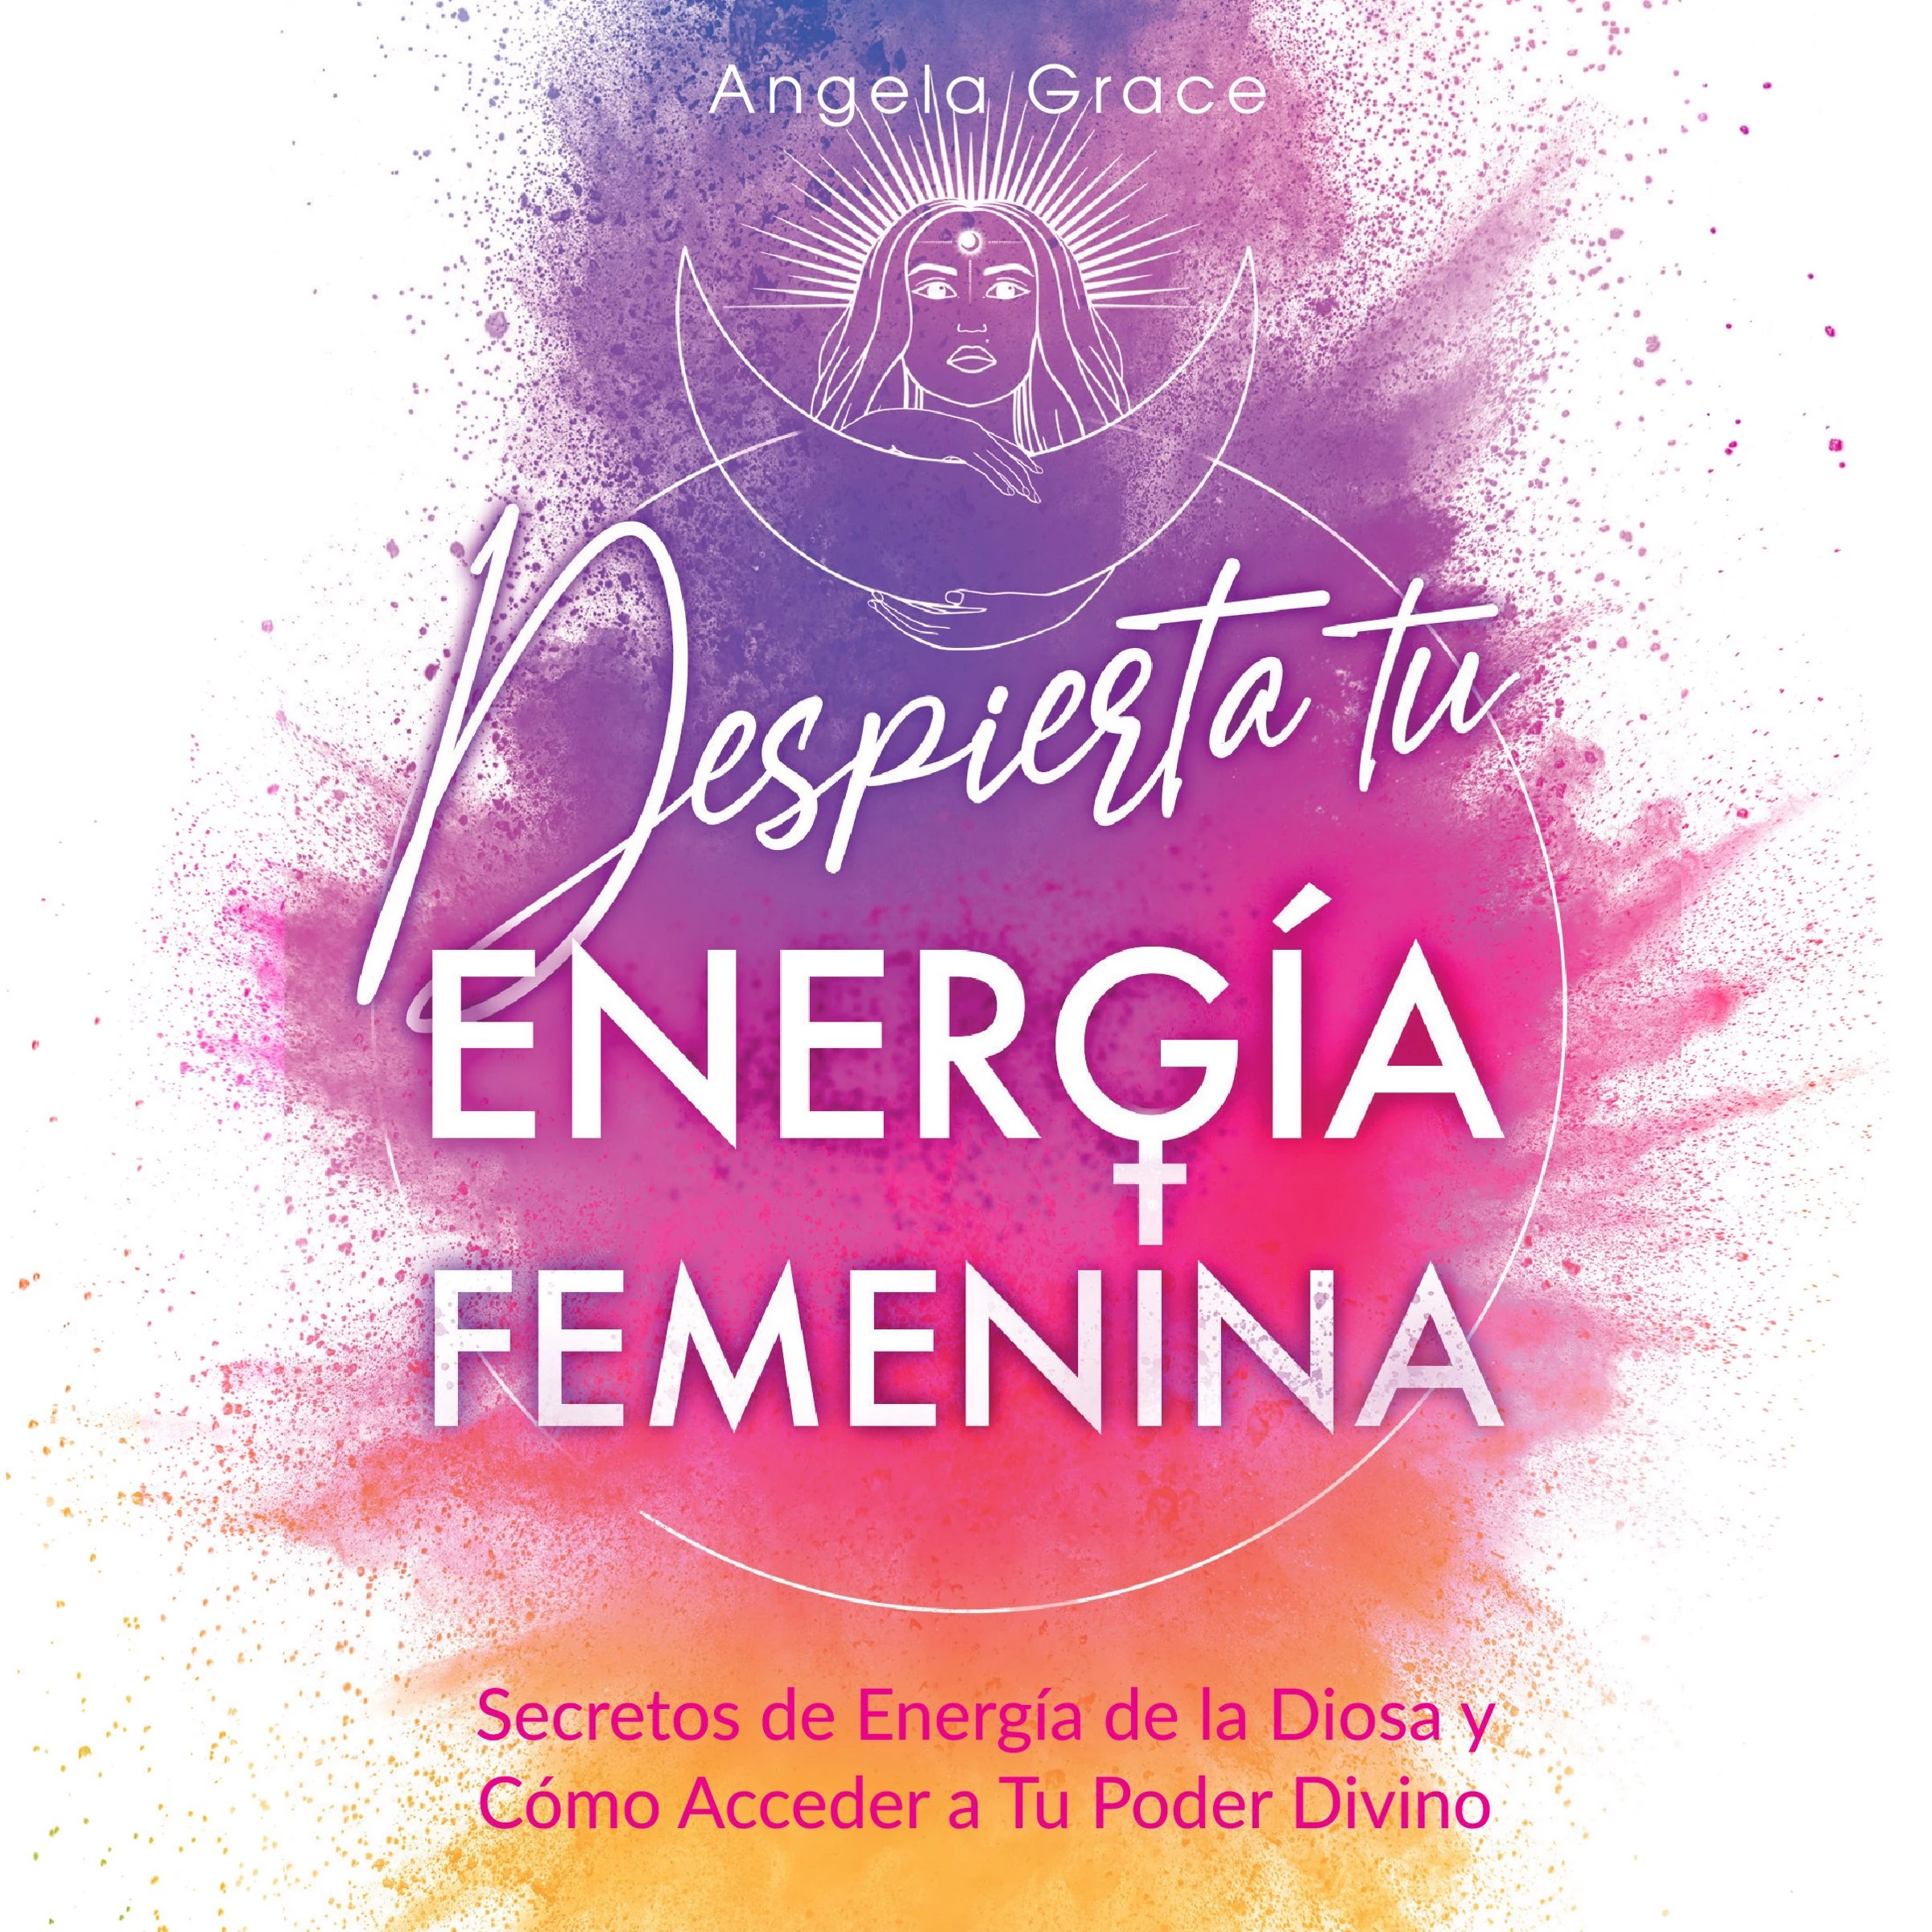 Despierta tu Energía Femenina by Angela Grace Audiobook